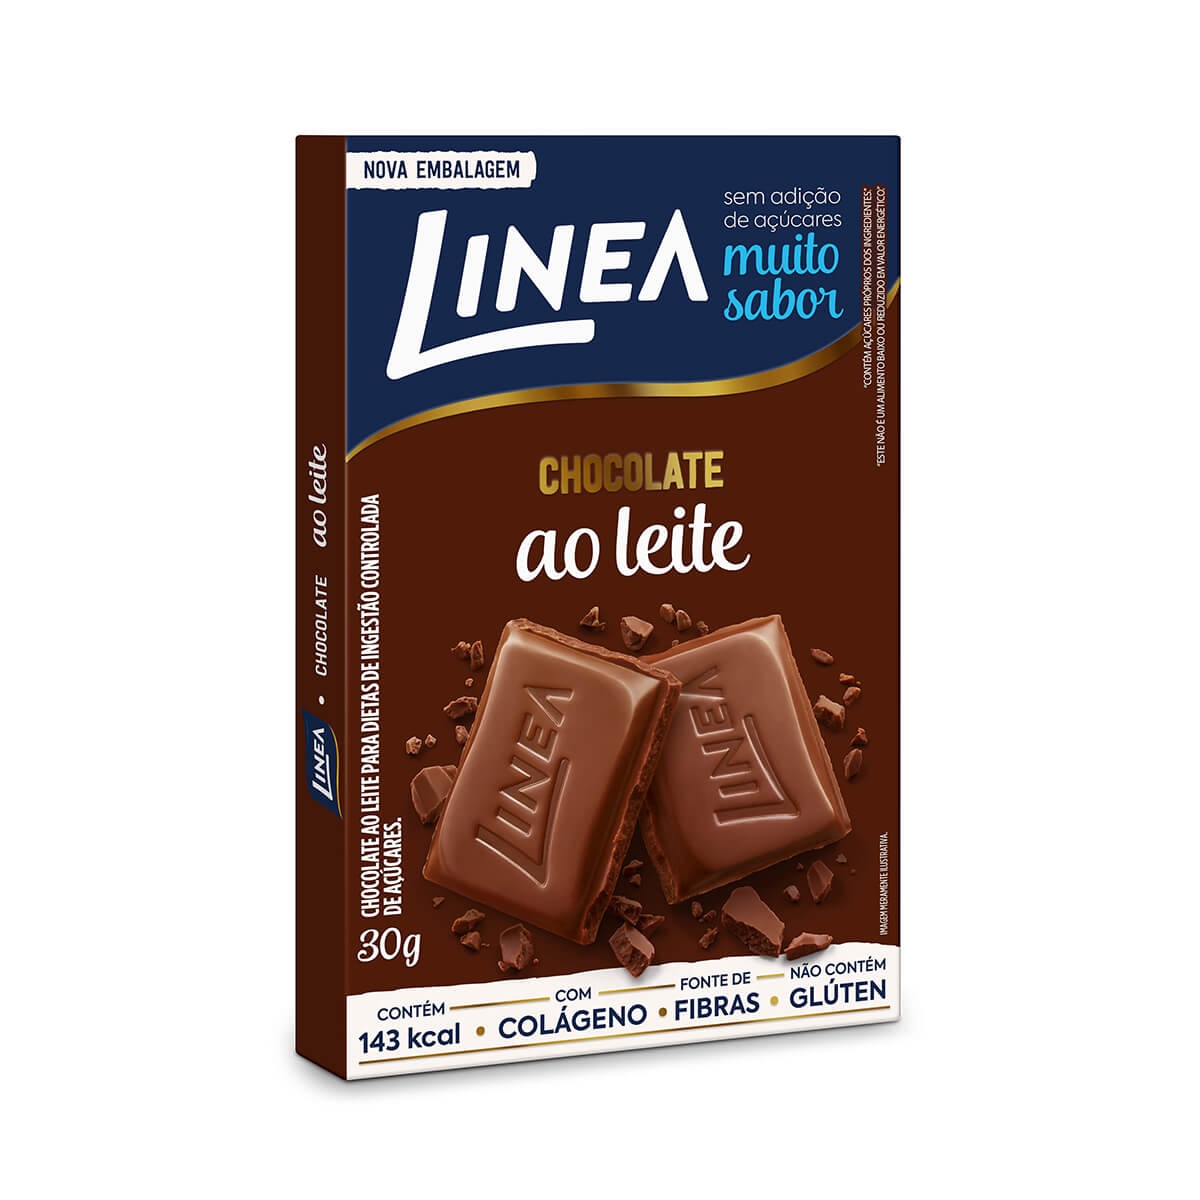 Barra Chocolate Branco Zero Açúcar 250g - Linea - Doce Malu